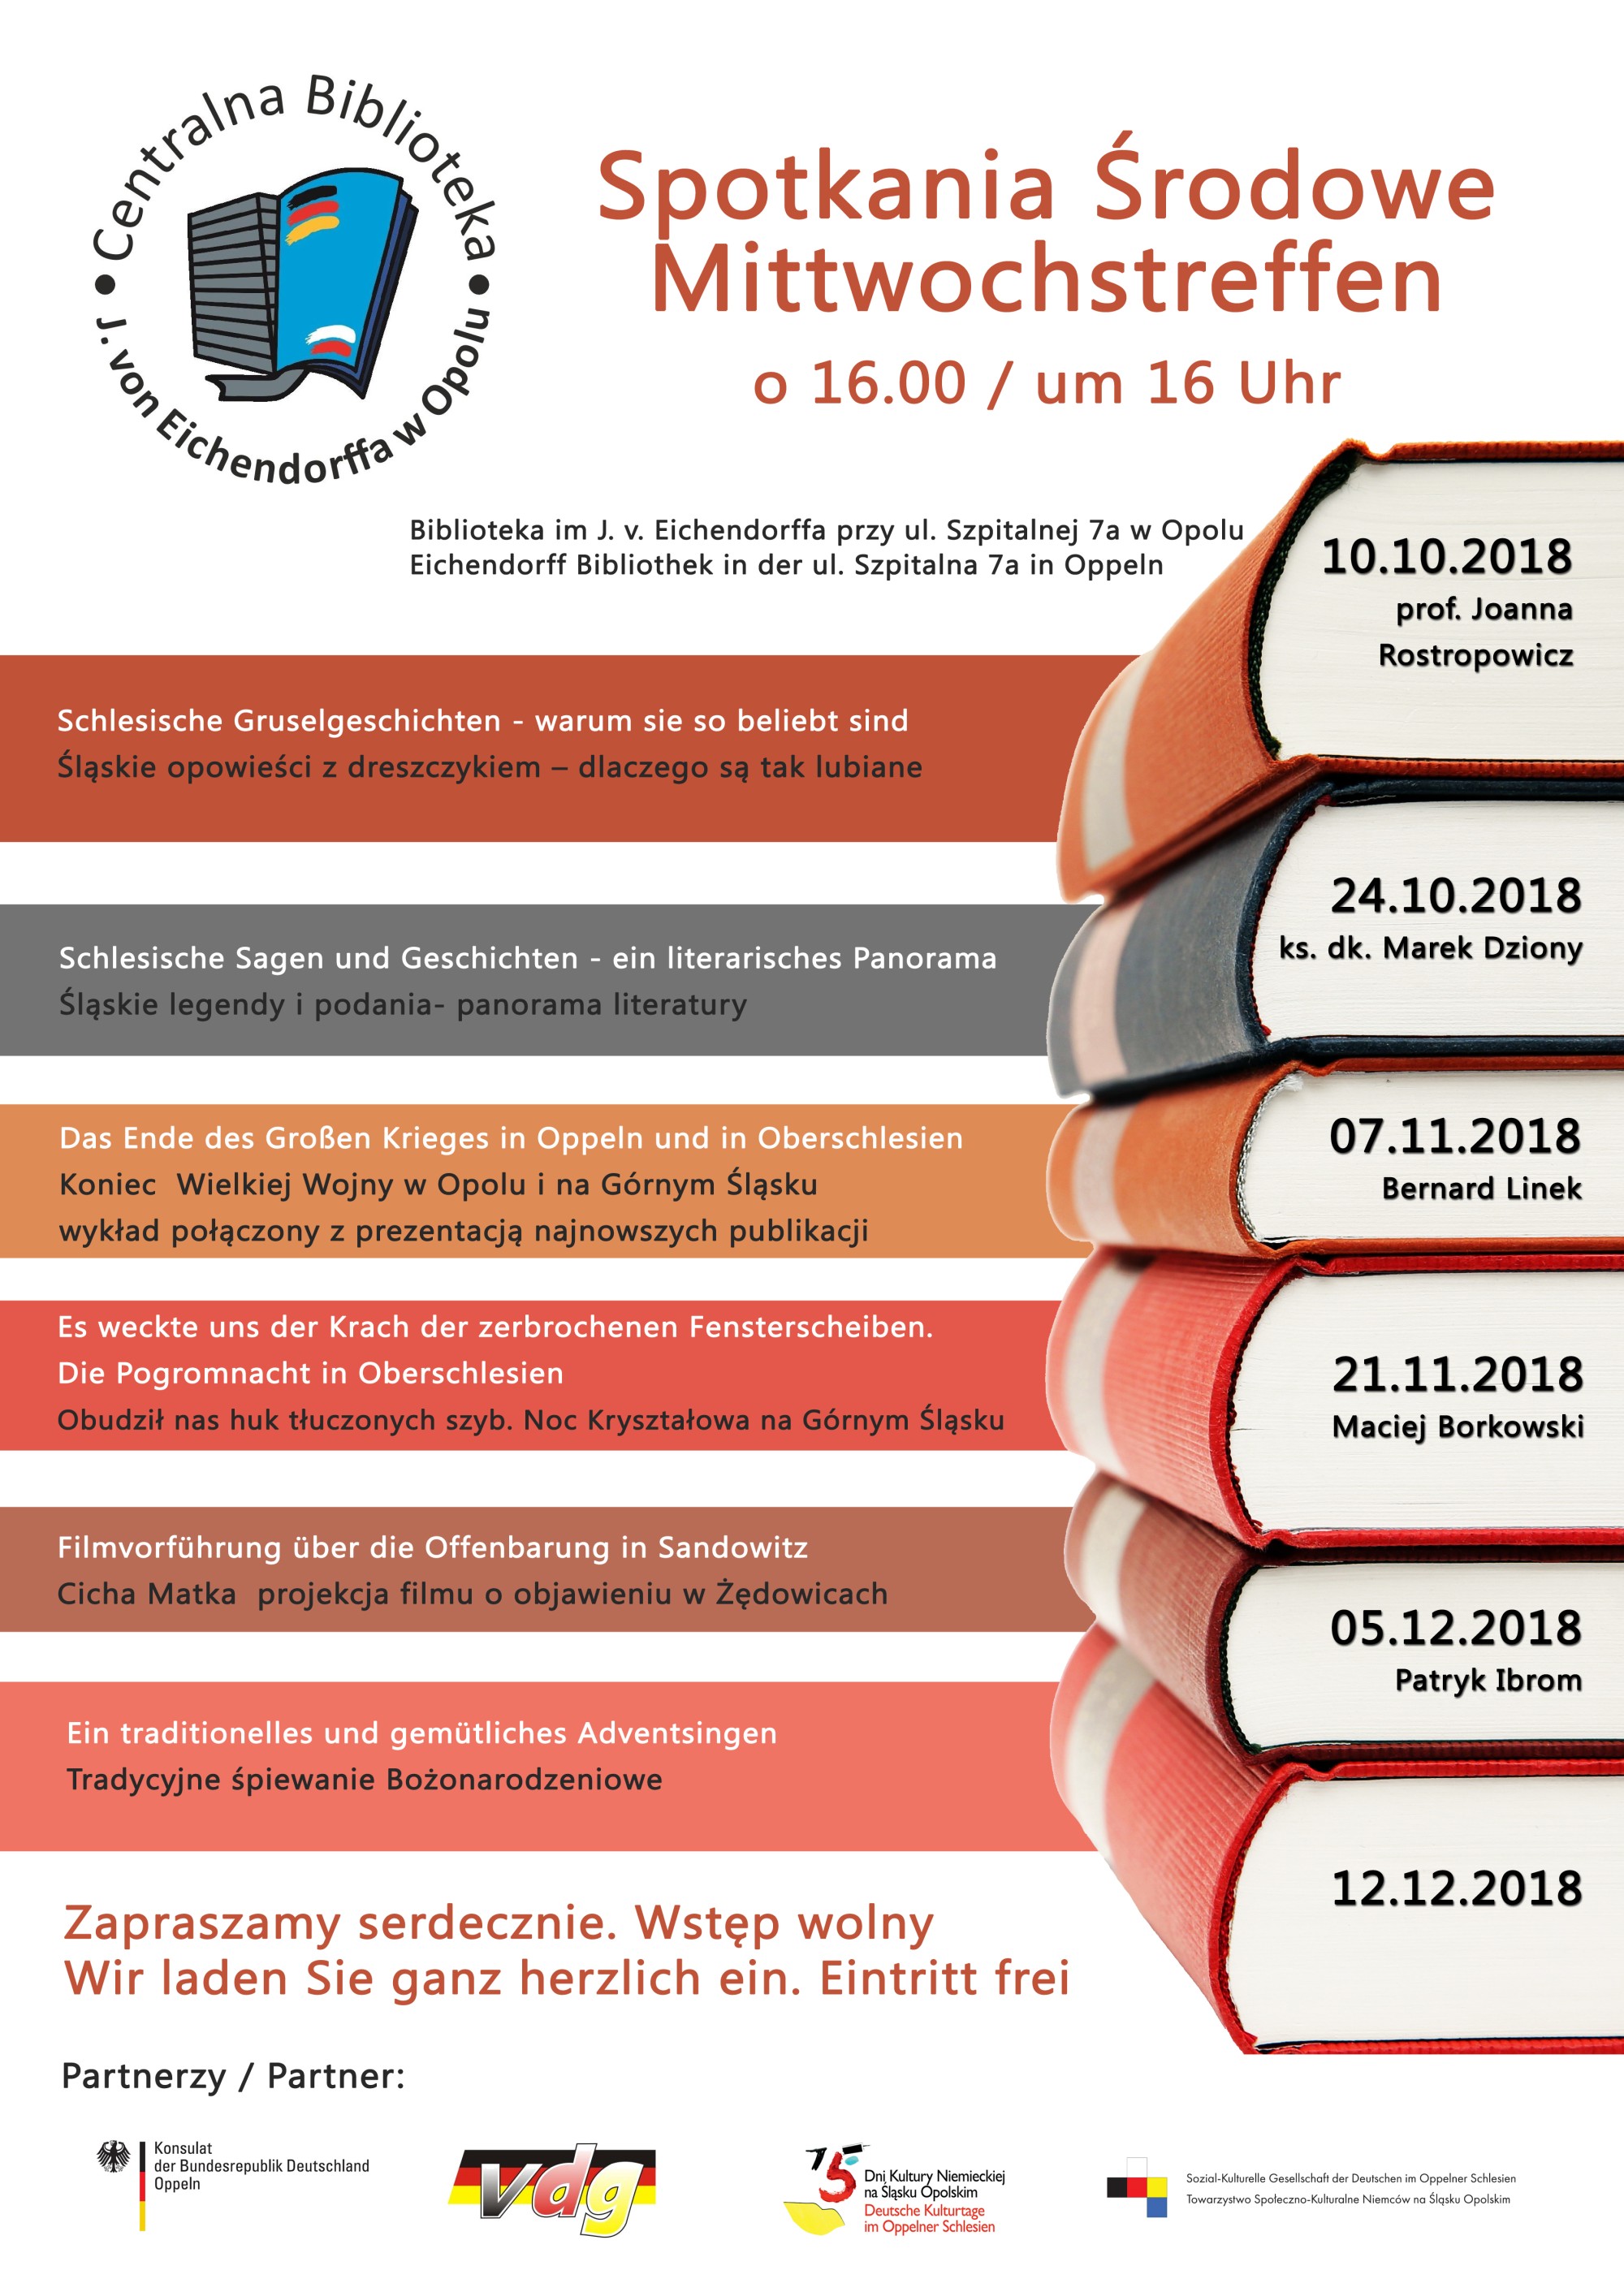 Spotkania kulturalne 2018 Biblioteka Eichendorffa Opole